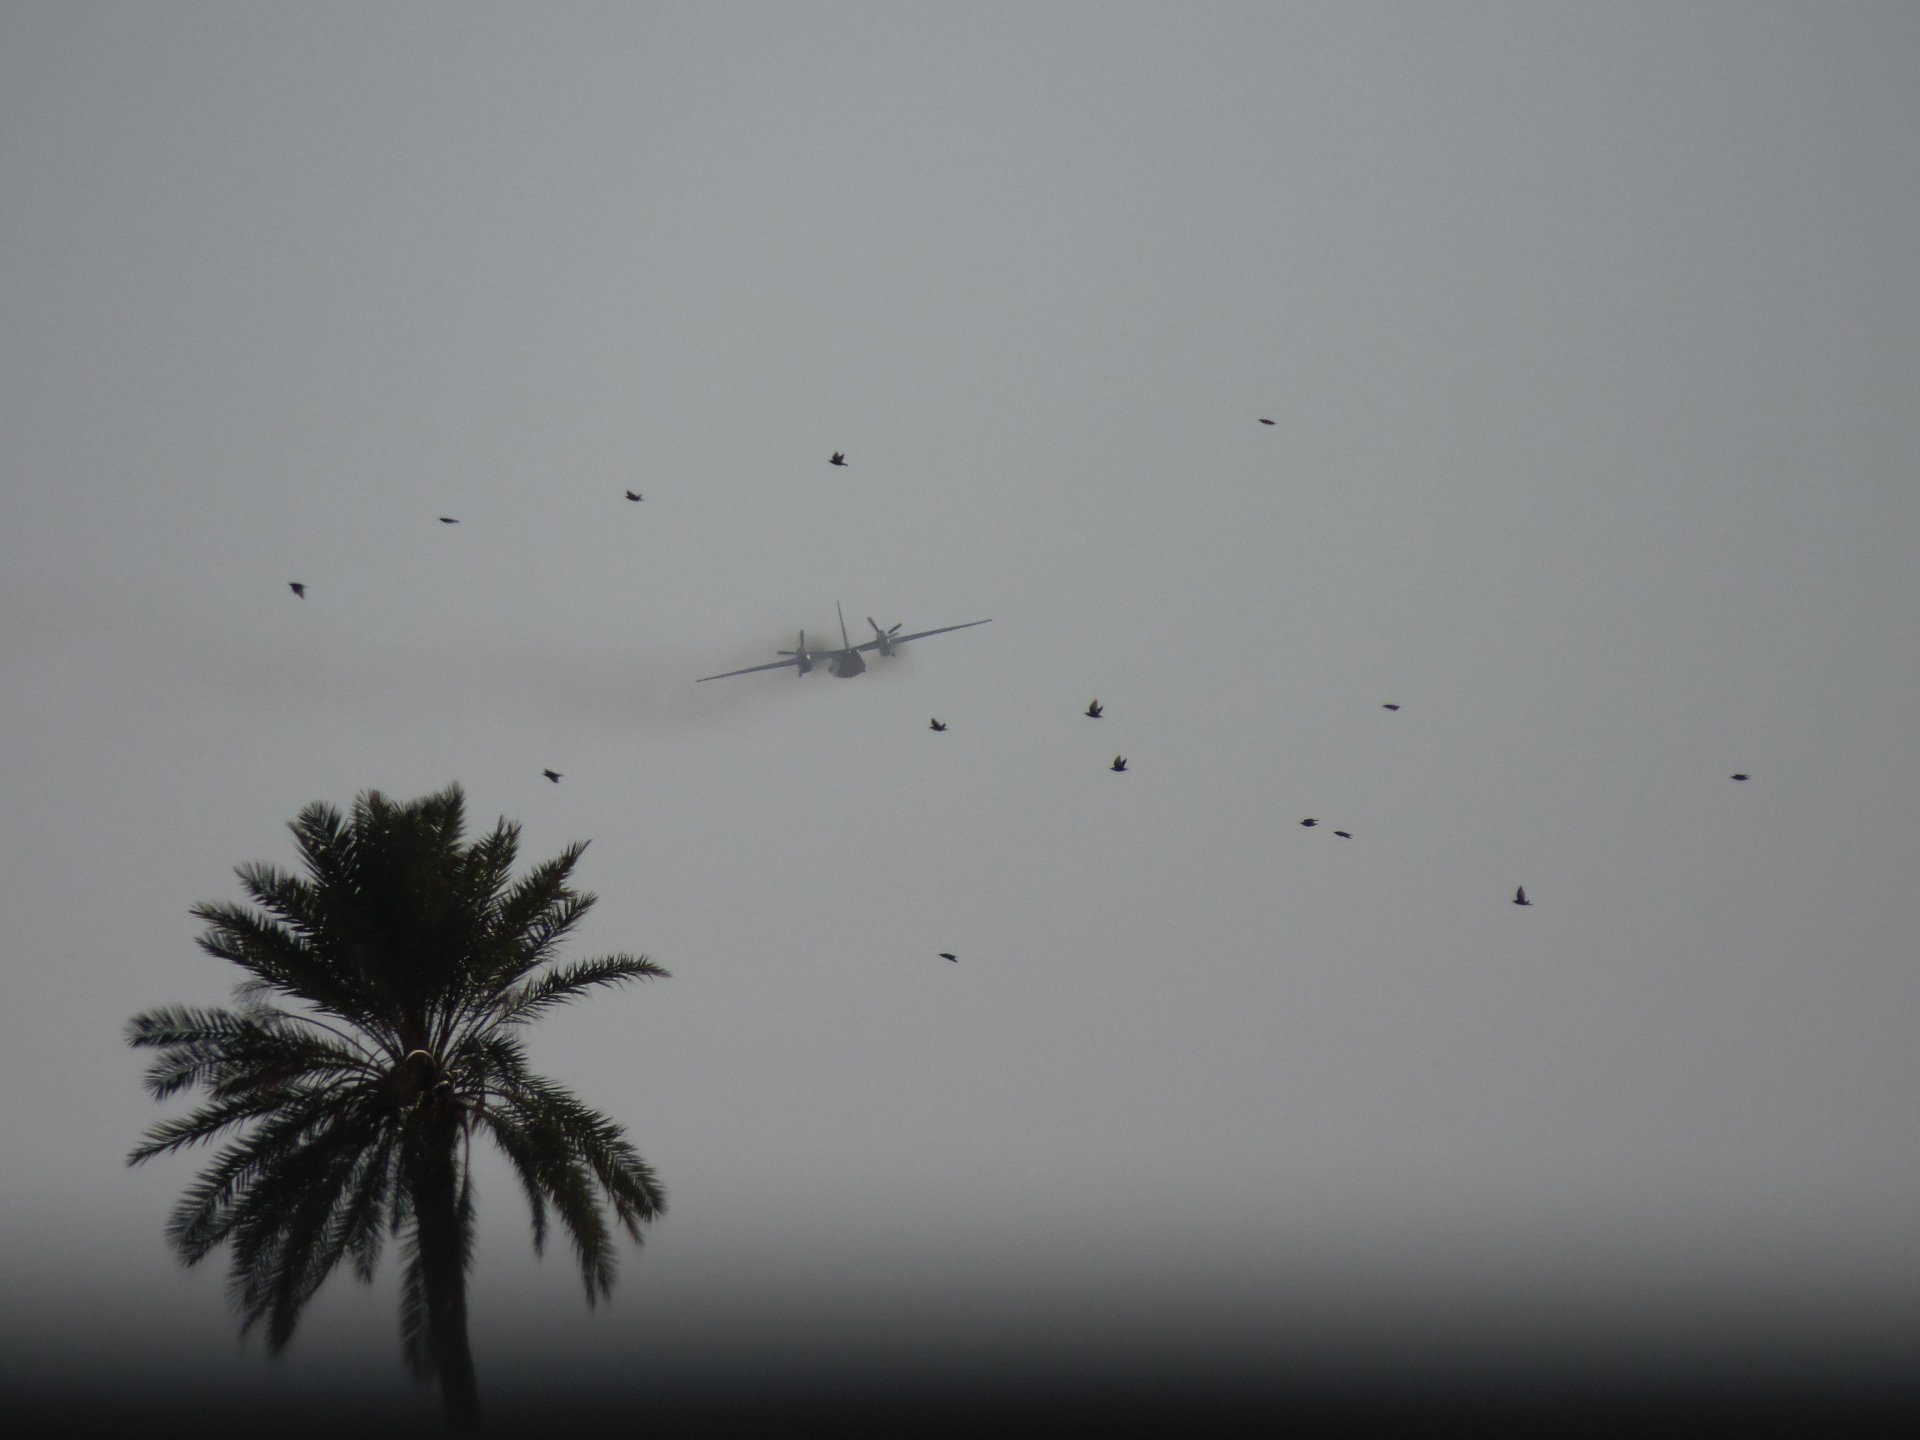 Libya sky vehicle aircraft Image